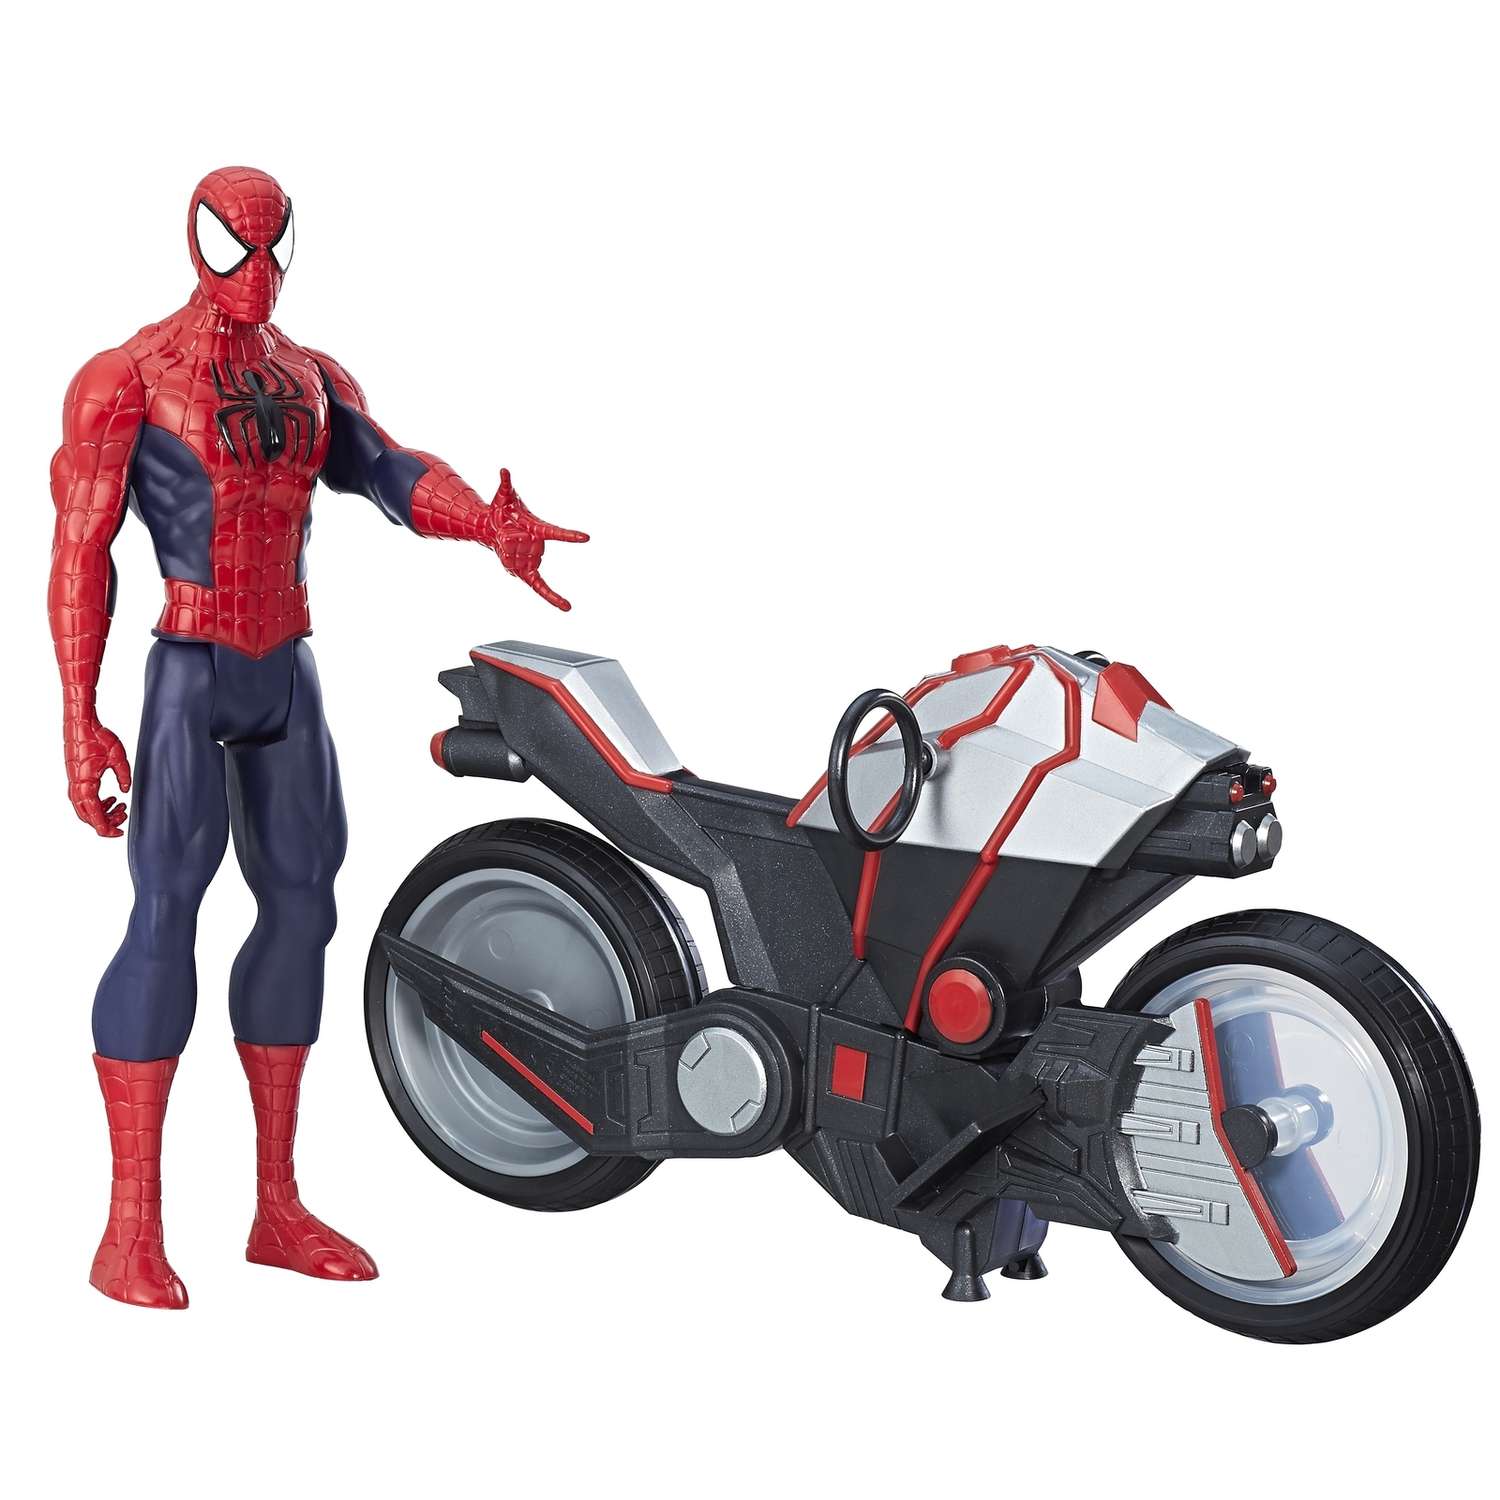 Фигурка Человек-Паук (Spider-man) Человек-Паук и мотоцикл B9767EU6 - фото 1